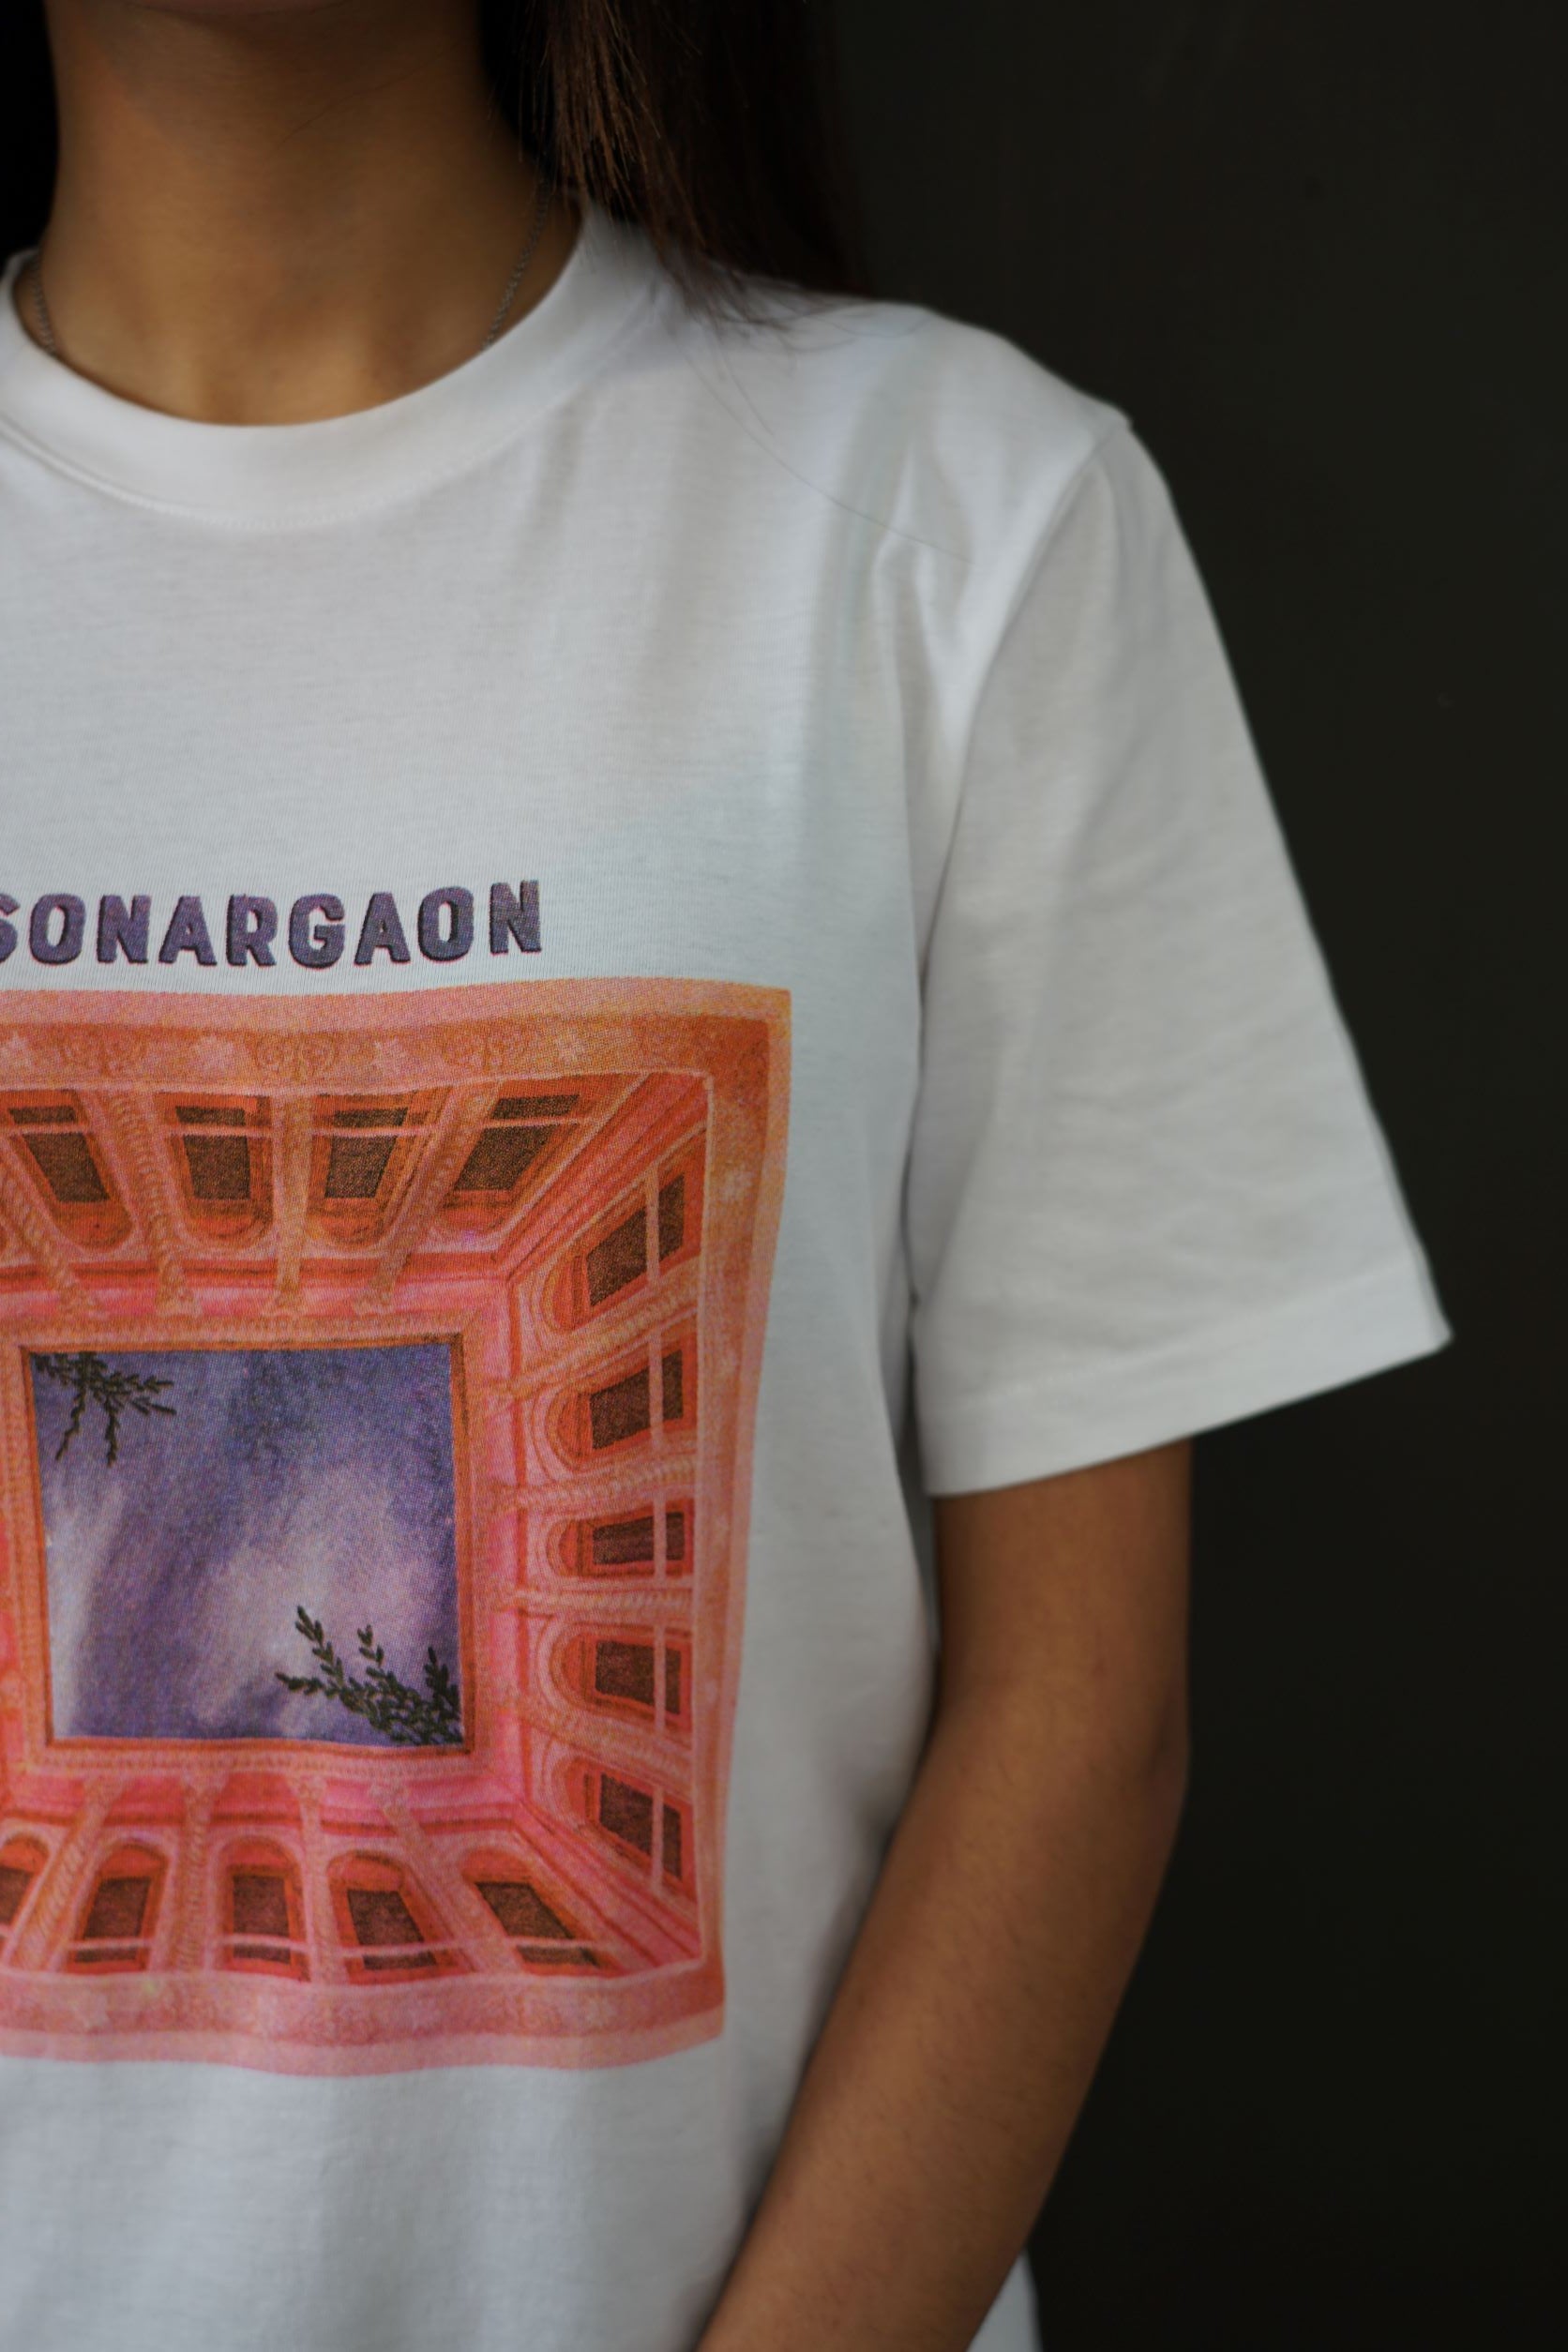 Sonargaon Tee - Bosphorus Fashion Ltd.